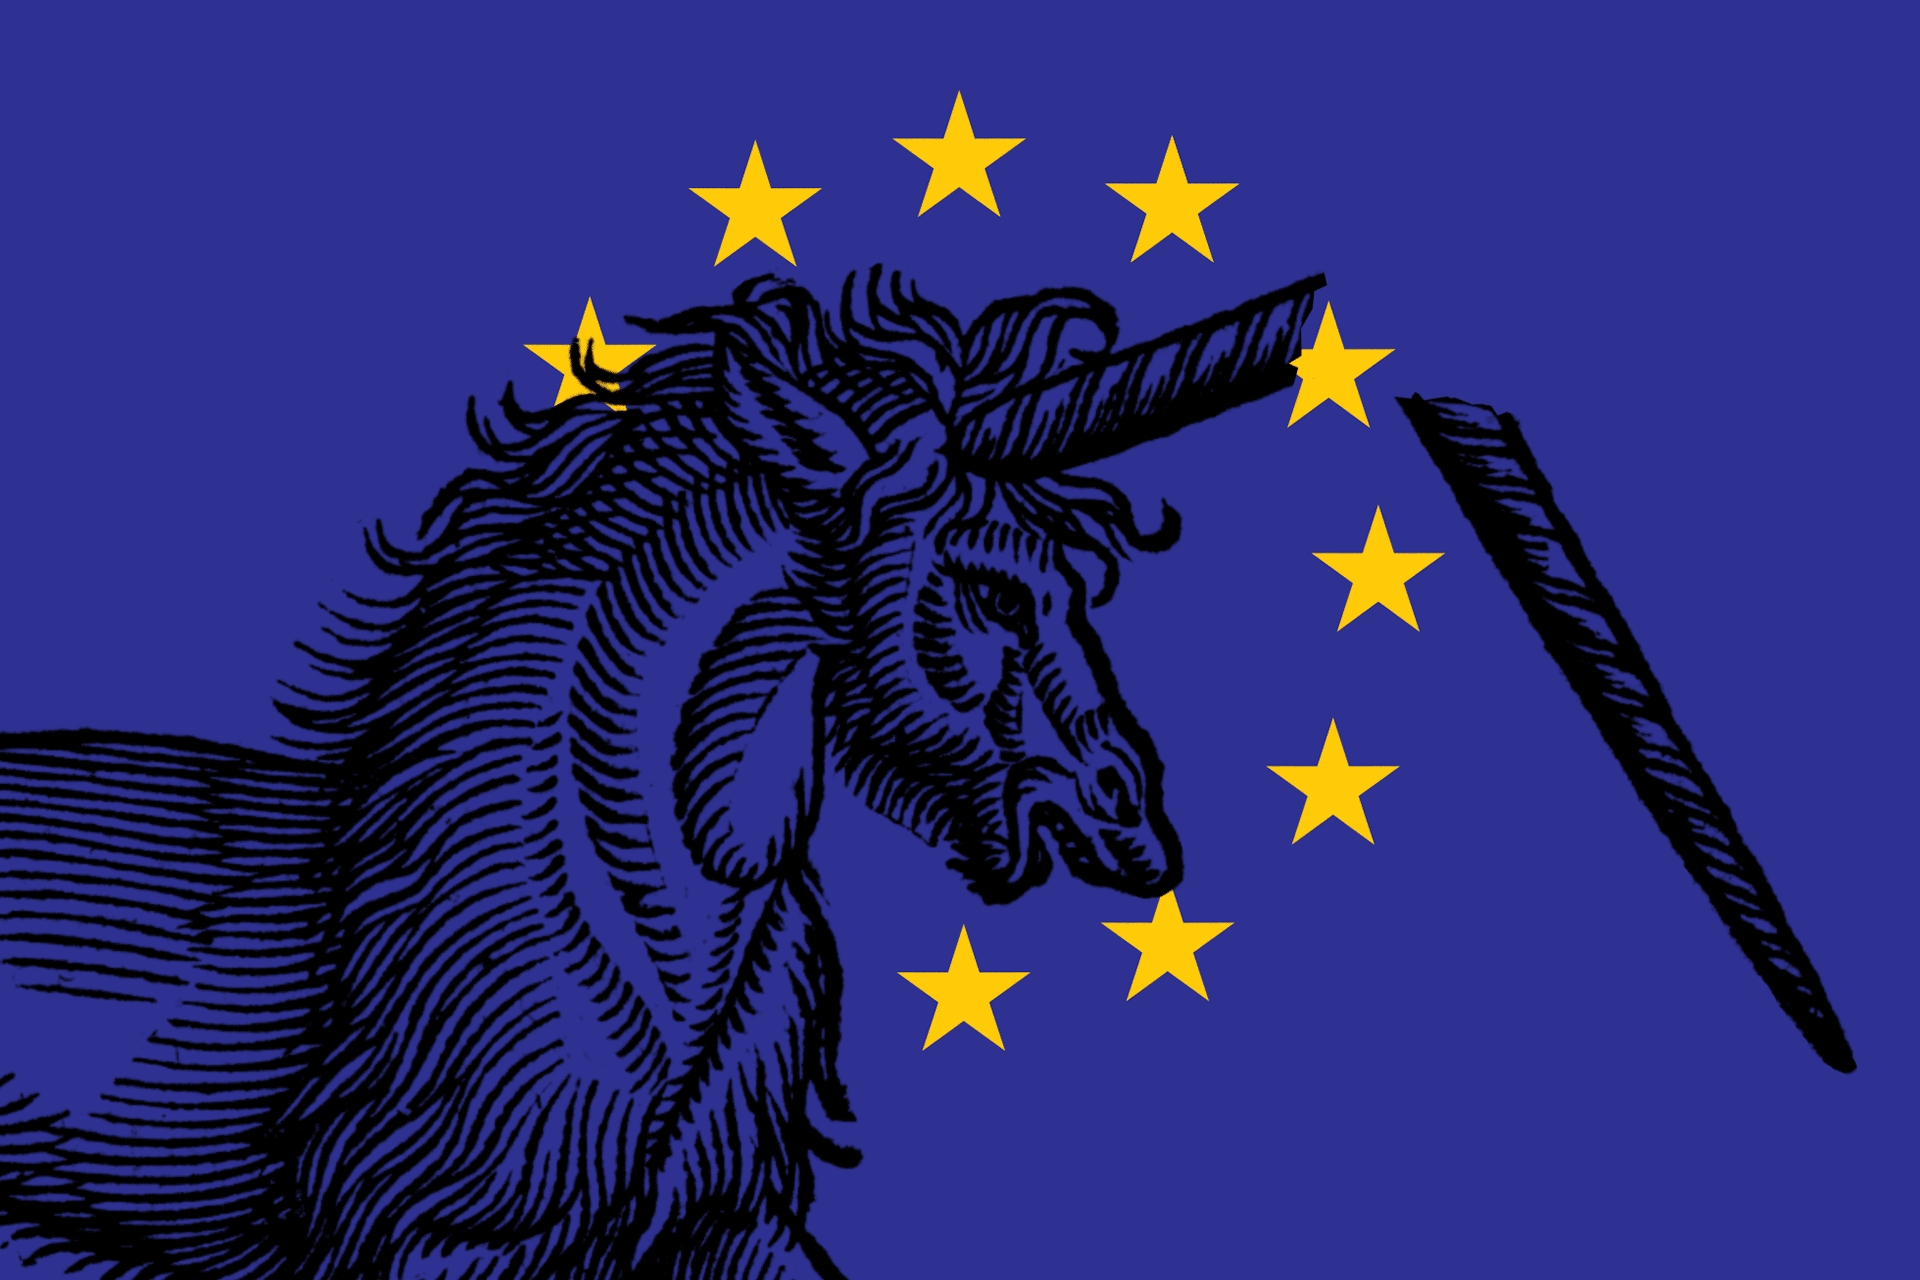 unicorn illustration breaking the star pattern in the EU flag